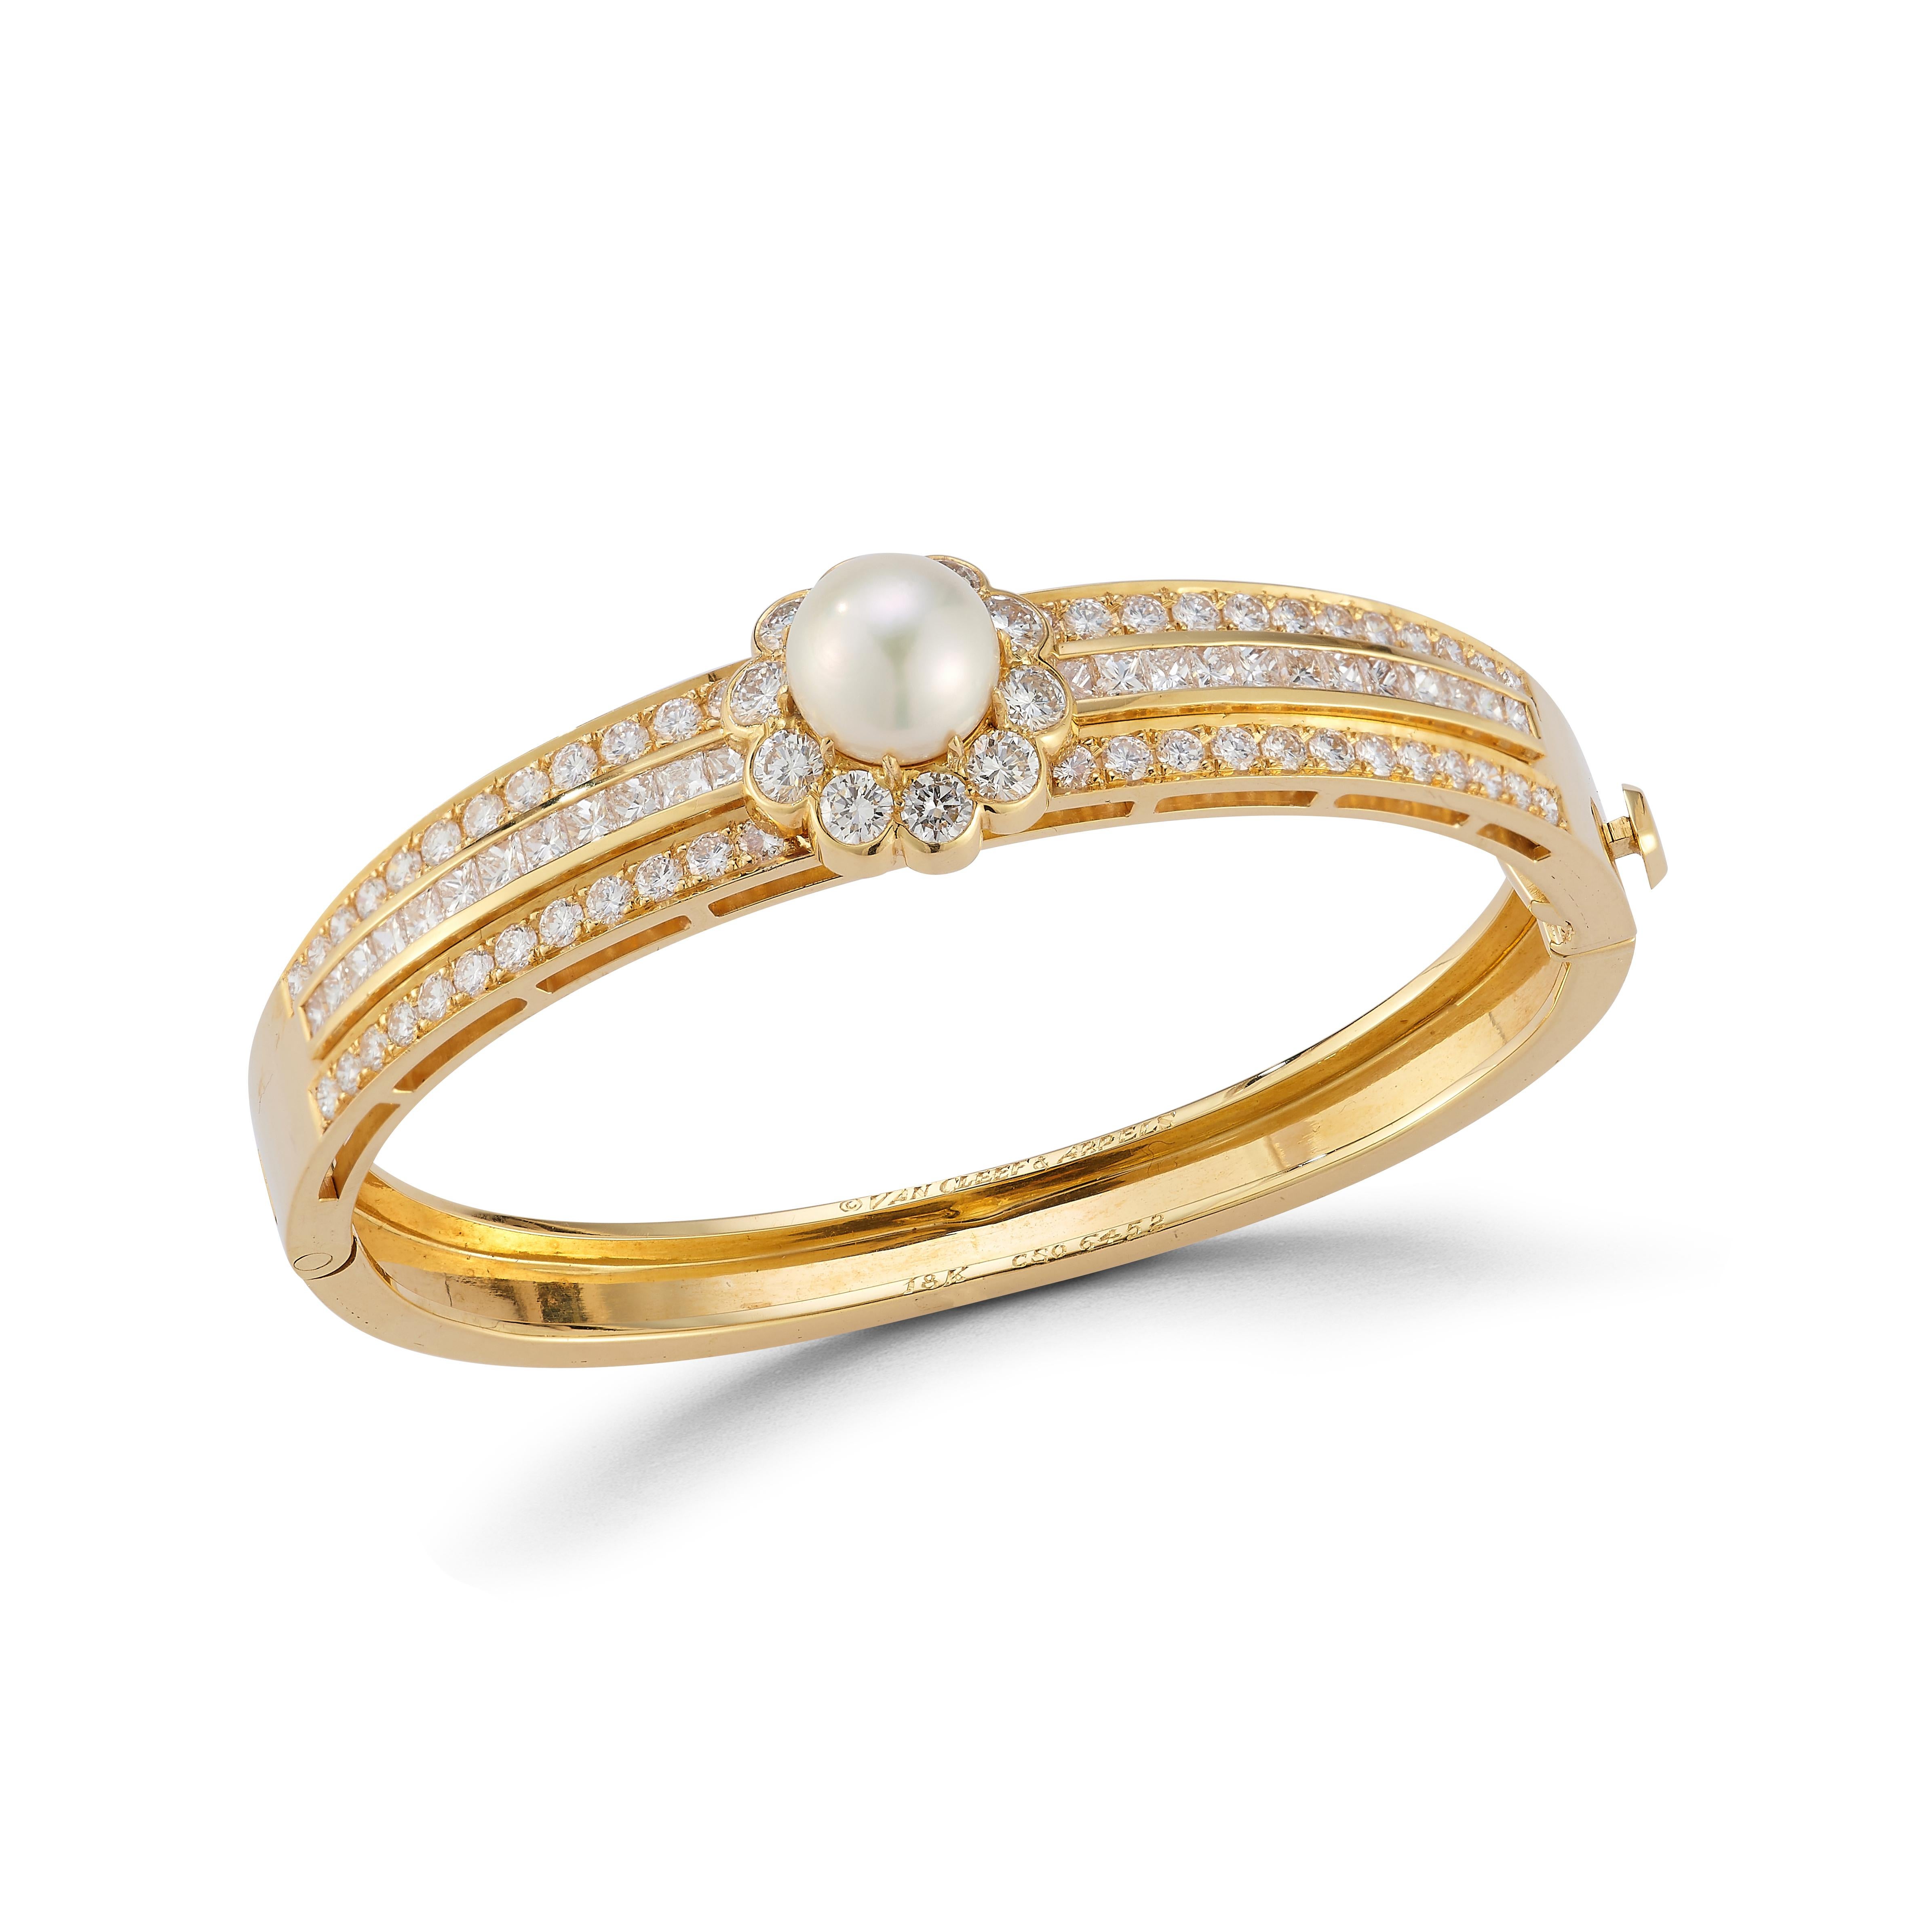 Van Cleef & Arpels Bracelet en perles et diamants

Bracelet en or jaune 18 carats serti d'une perle dans un halo de 10 diamants ronds, flanqués de chaque côté de 48 diamants ronds et de 24 diamants carrés.

Signé Van Cleef & Arpels et